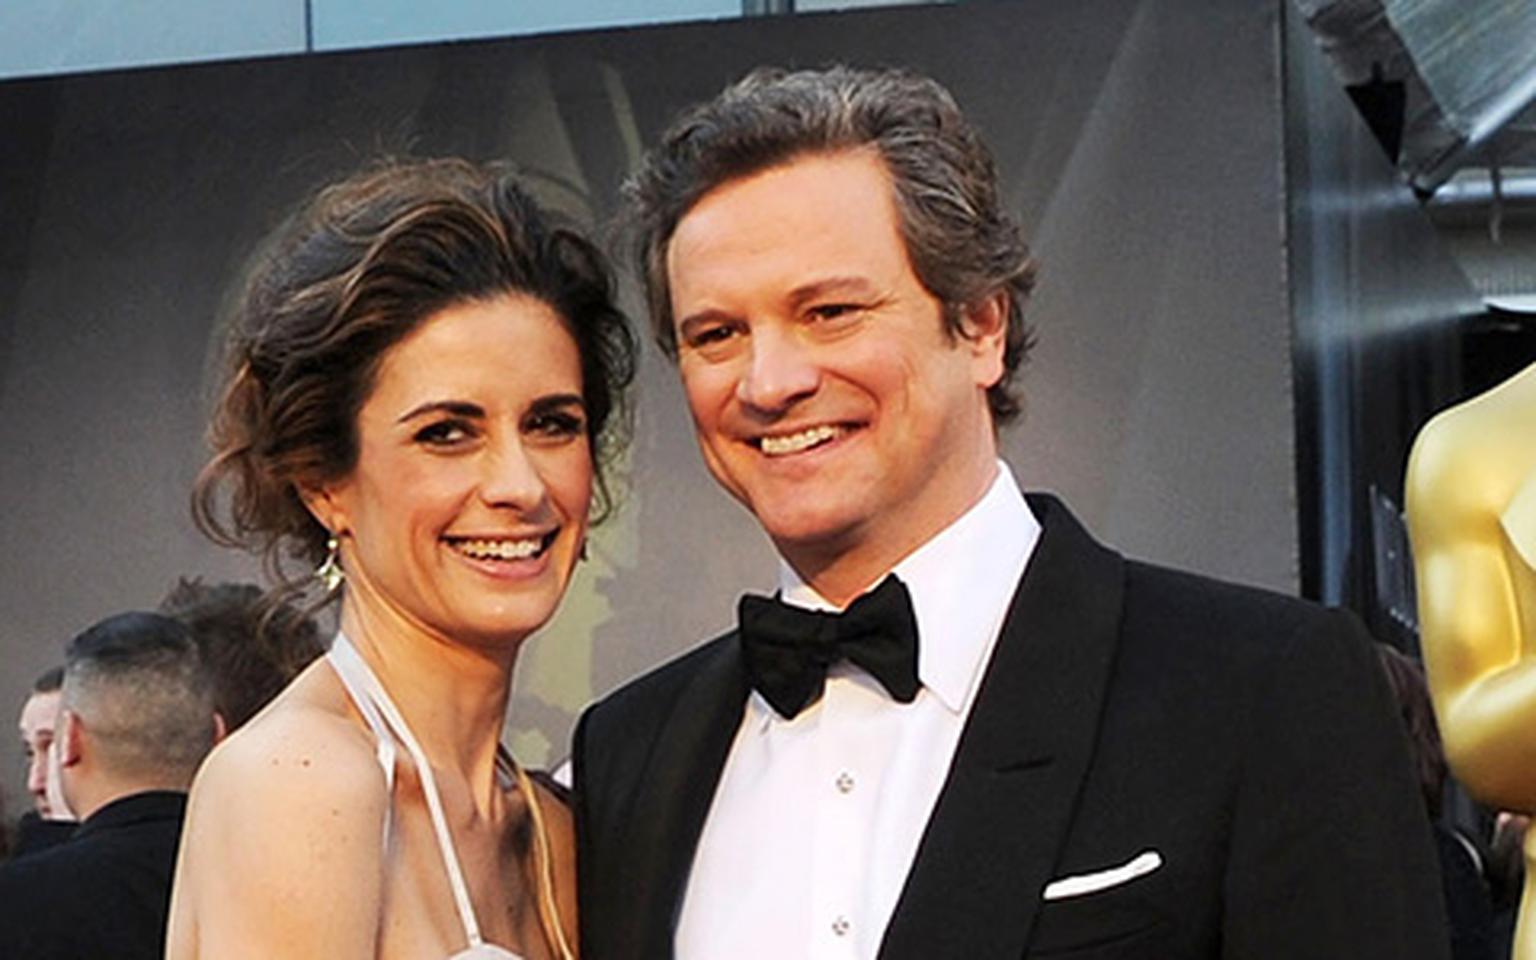 Mr & Mrs Colin Firth at 2011 Oscars